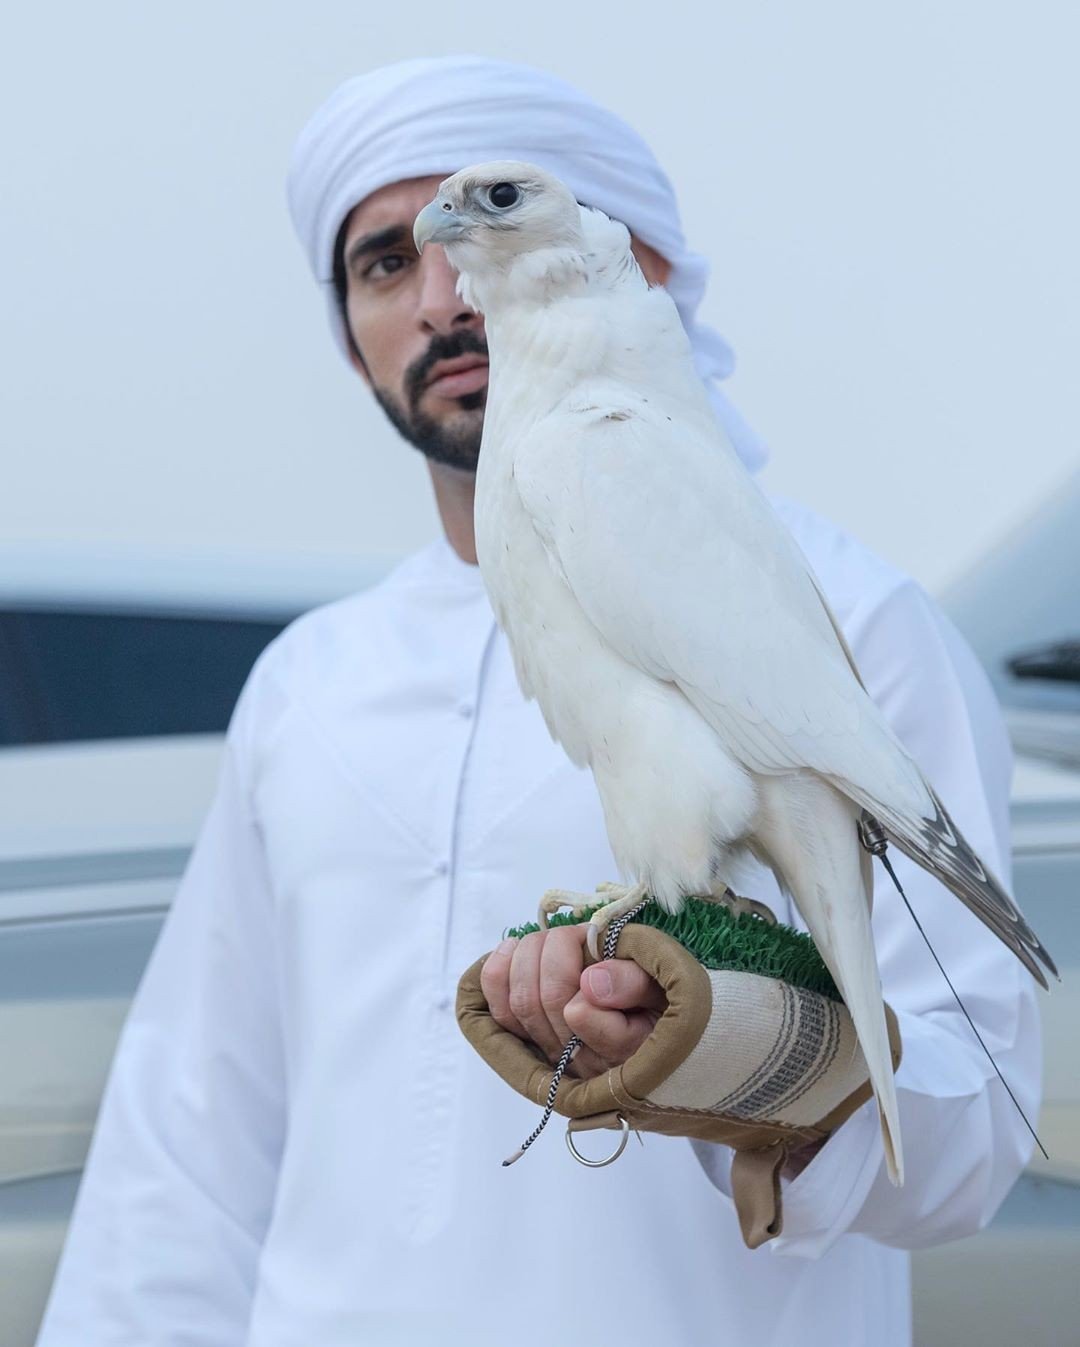 Falconry is a traditional pastime in the UAE, where Sheikh Hamdan bin Mohammed Rashid Al Maktoum is Crown Prince. Photo: Instagram